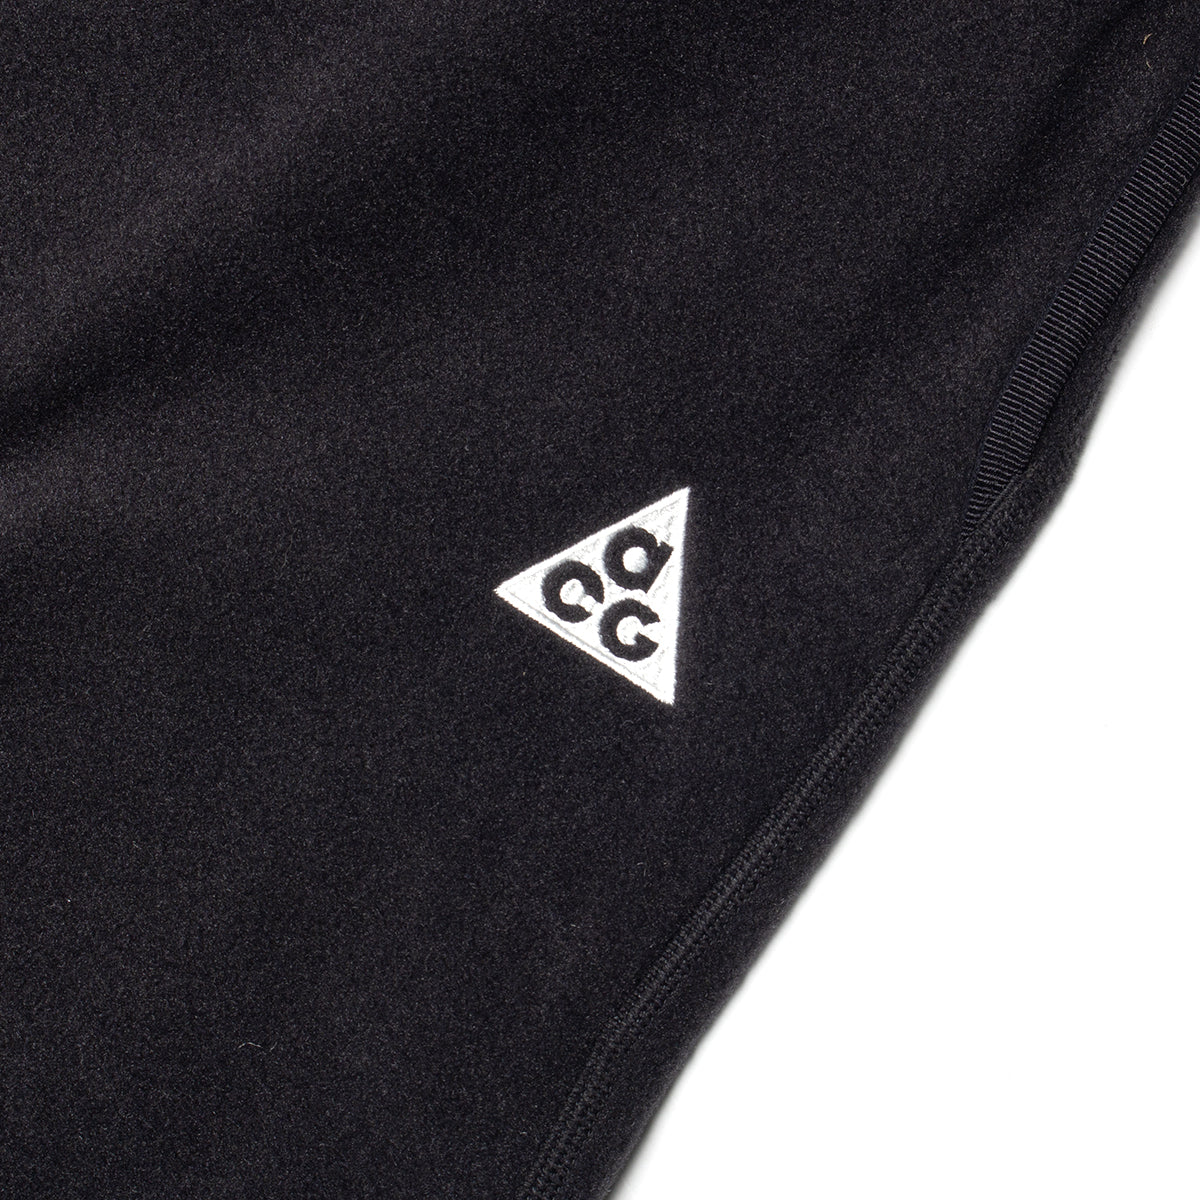 Nike | ACG Wolf Tree Pant Style # CV0658-011 Color : Black / Black / Summit White